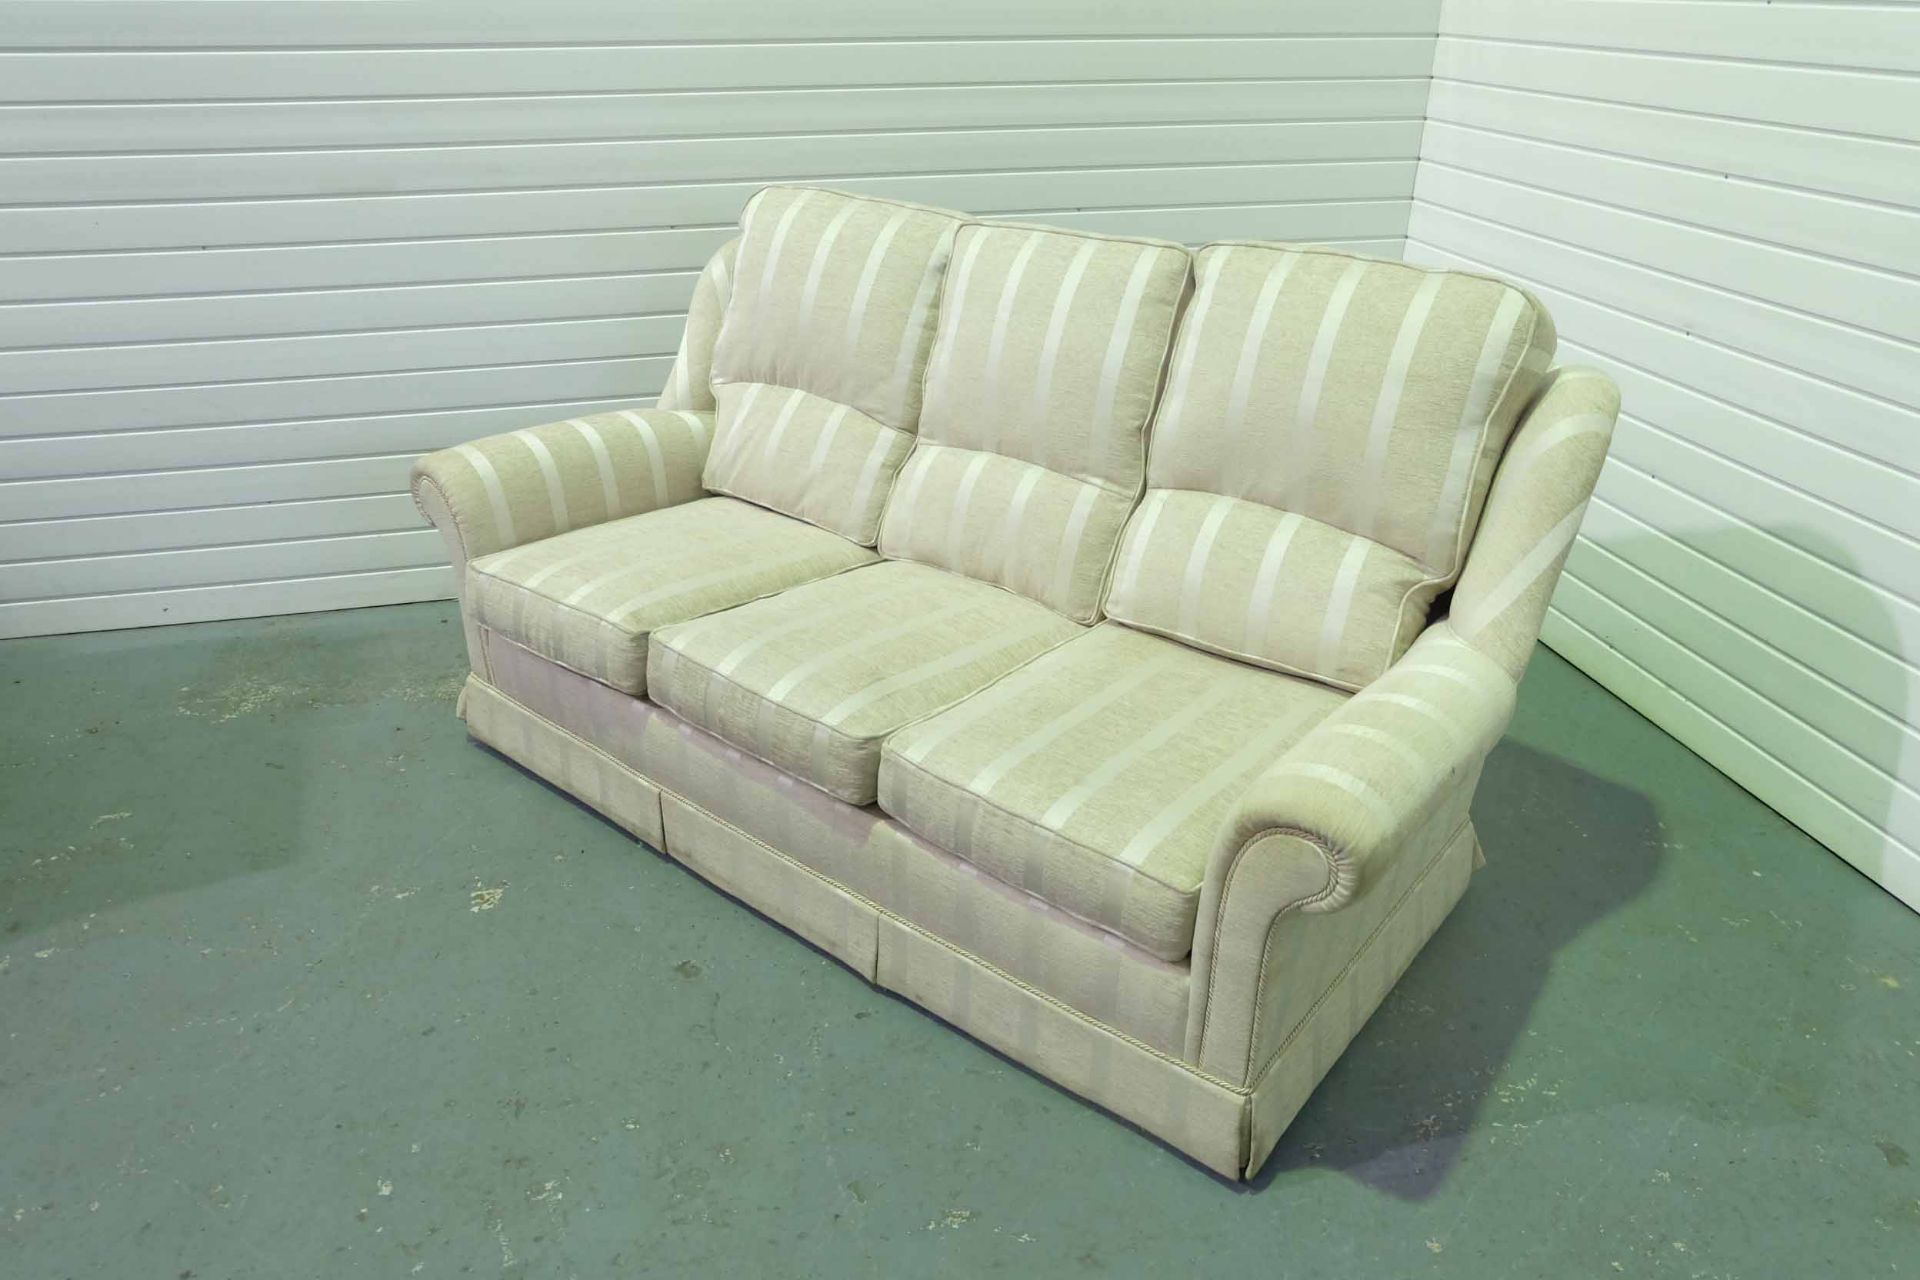 Steed Upholstery 'Hamilton' Range Fully Handmade 3 Seater Sofa. With Valance. - Image 2 of 3